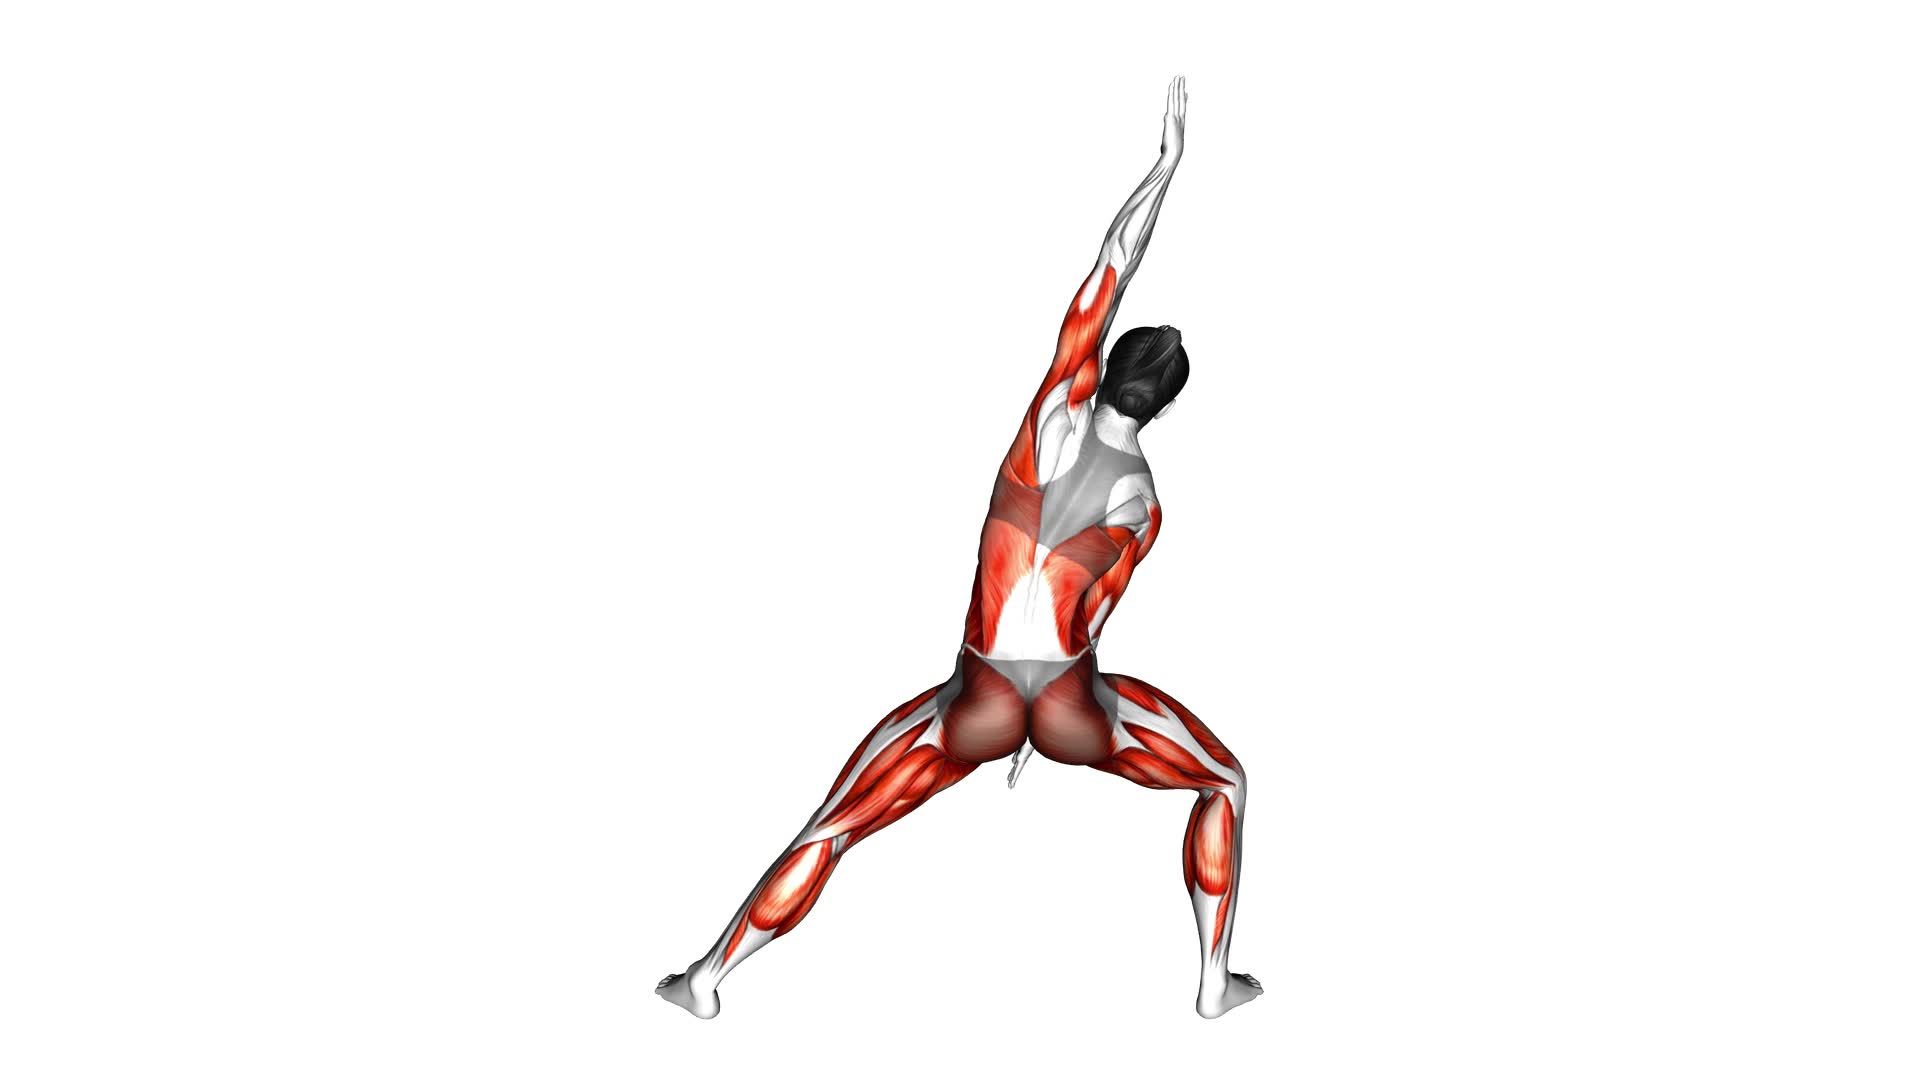 Dancer Bend (female) - Video Exercise Guide & Tips